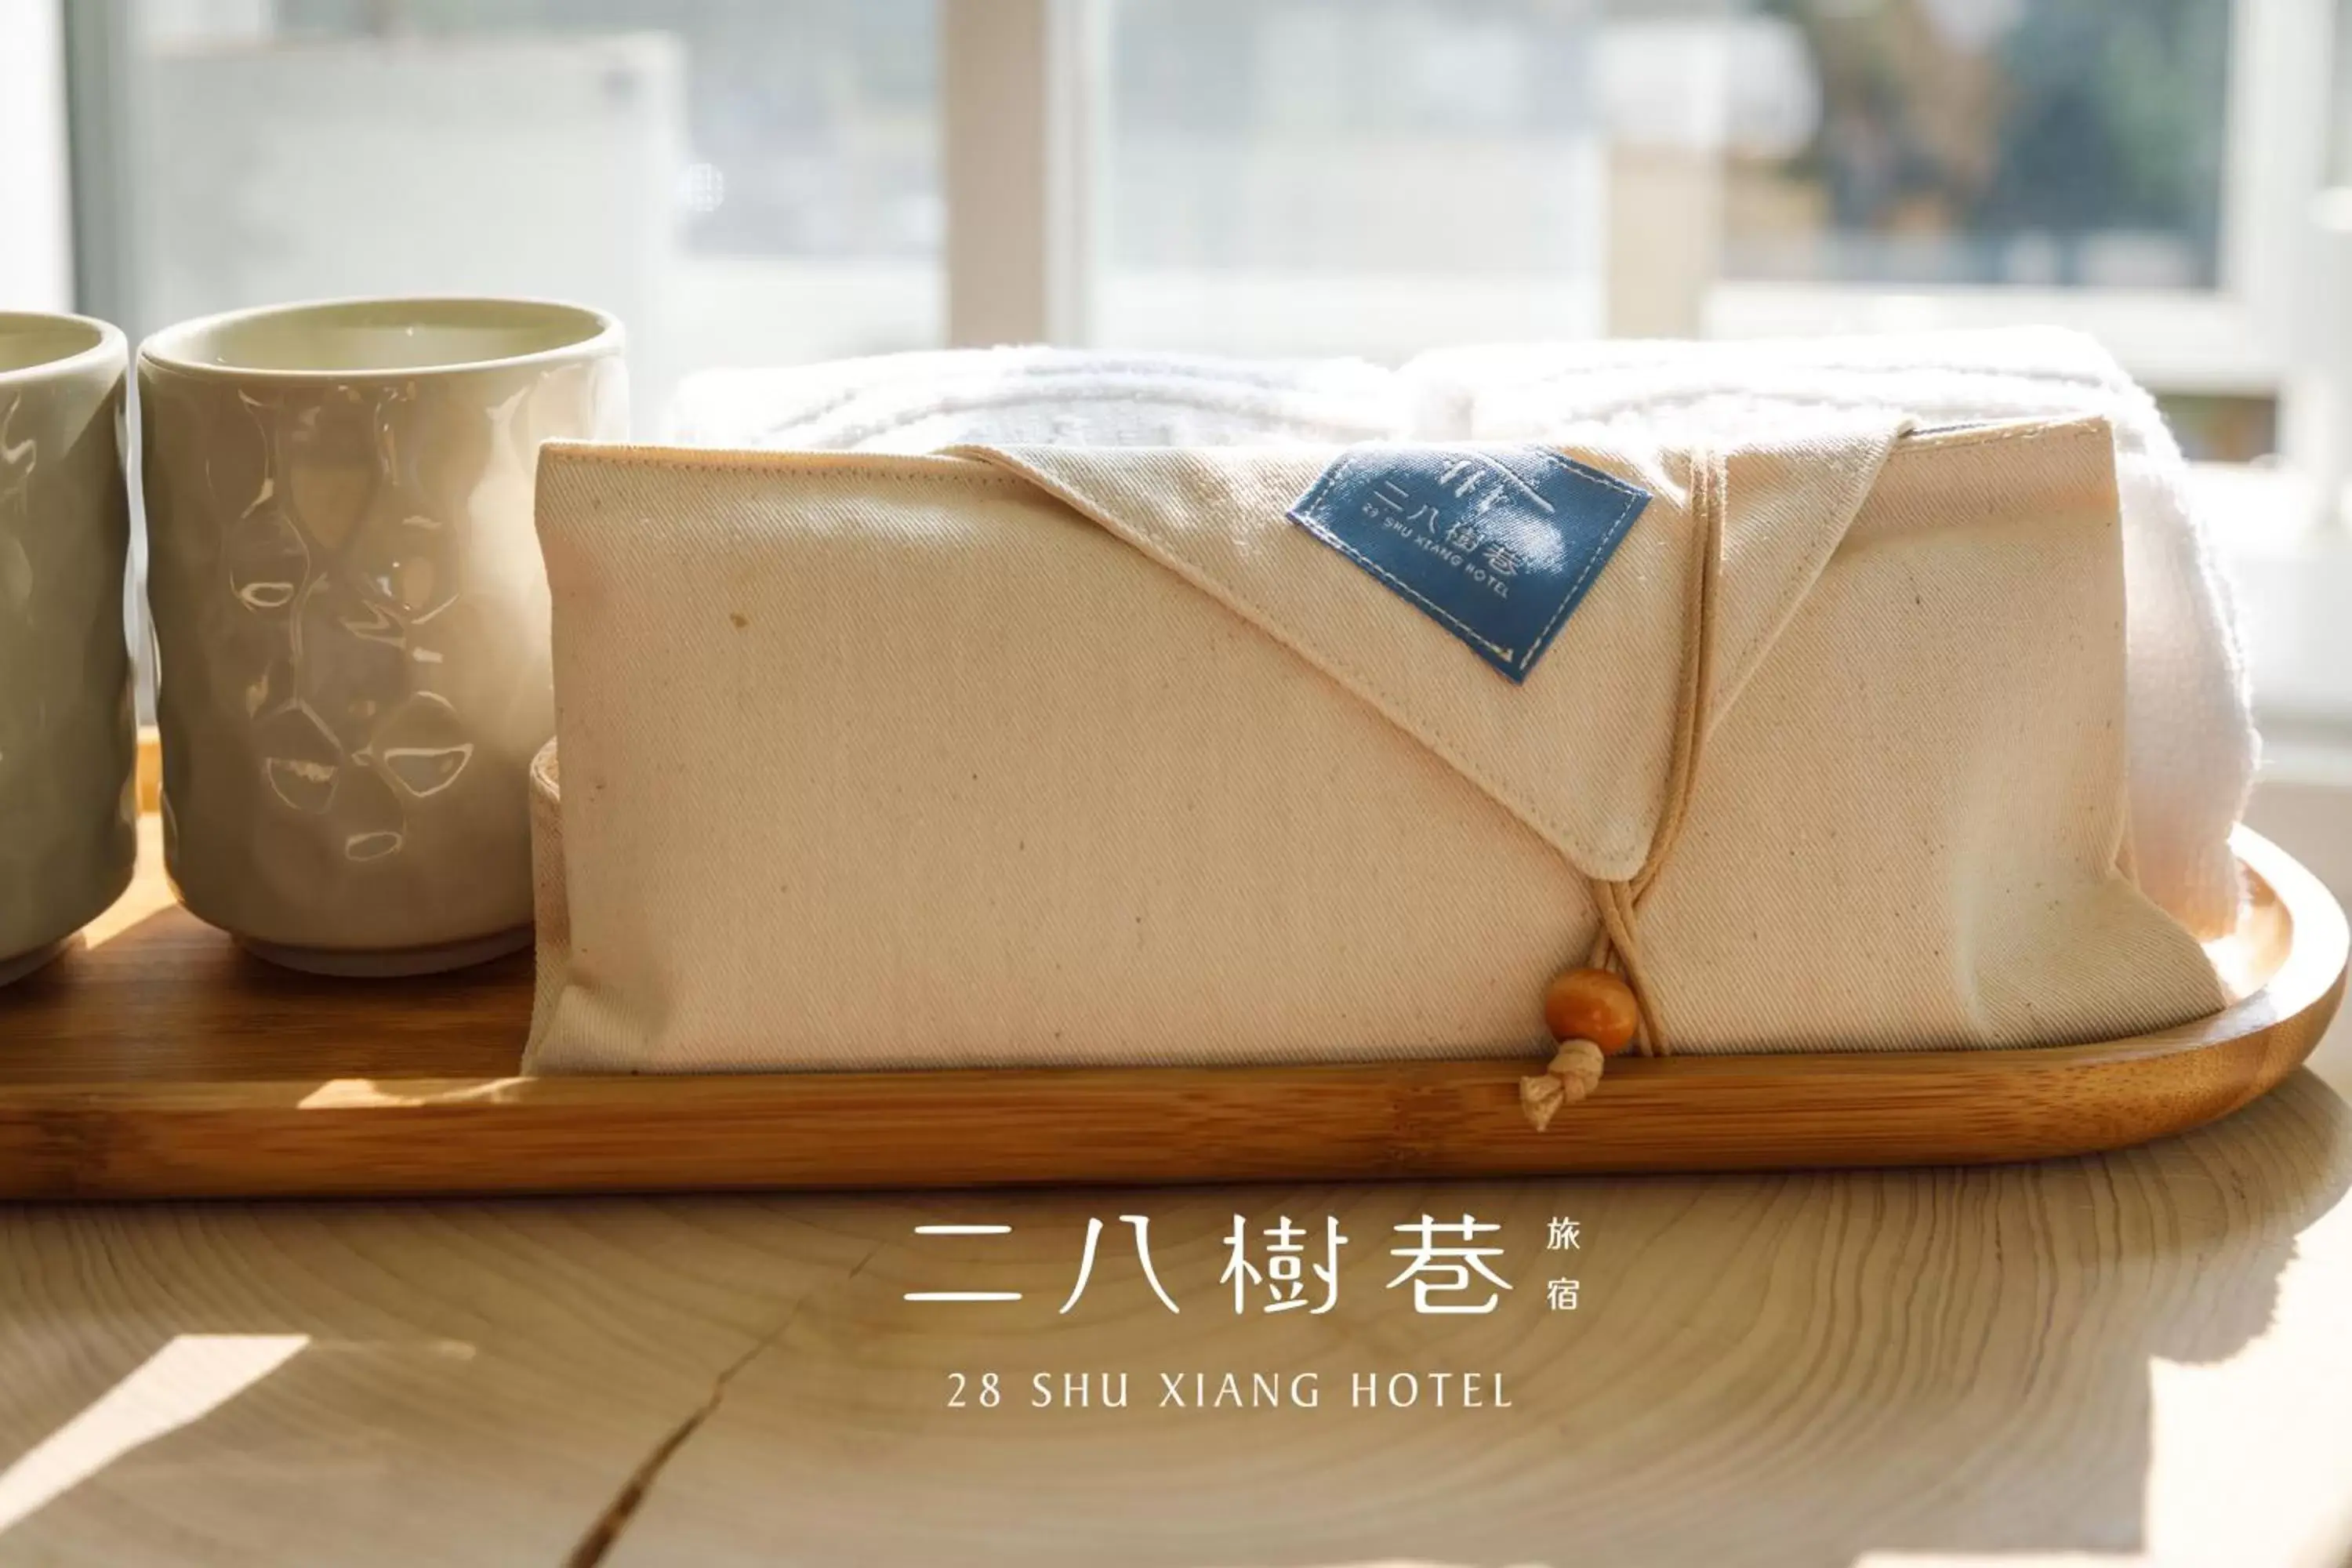 Text overlay in 28 Shu Xiang Hotel